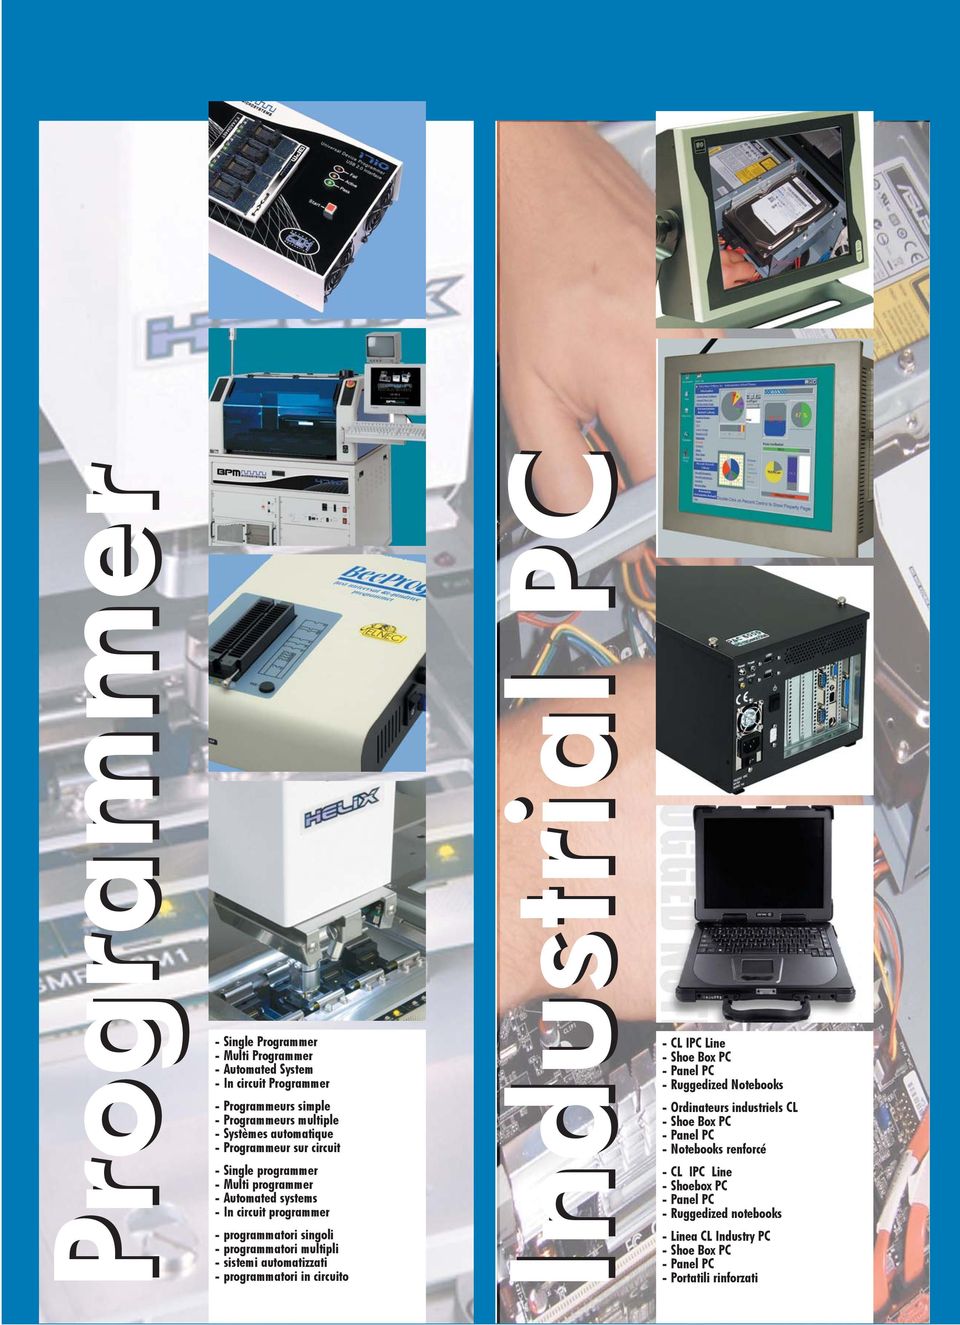 programmatori multipli - sistemi automatizzati - programmatori in circuito Industrial PC - CL IPC Line - Shoe Box PC - Ruggedized Notebooks -